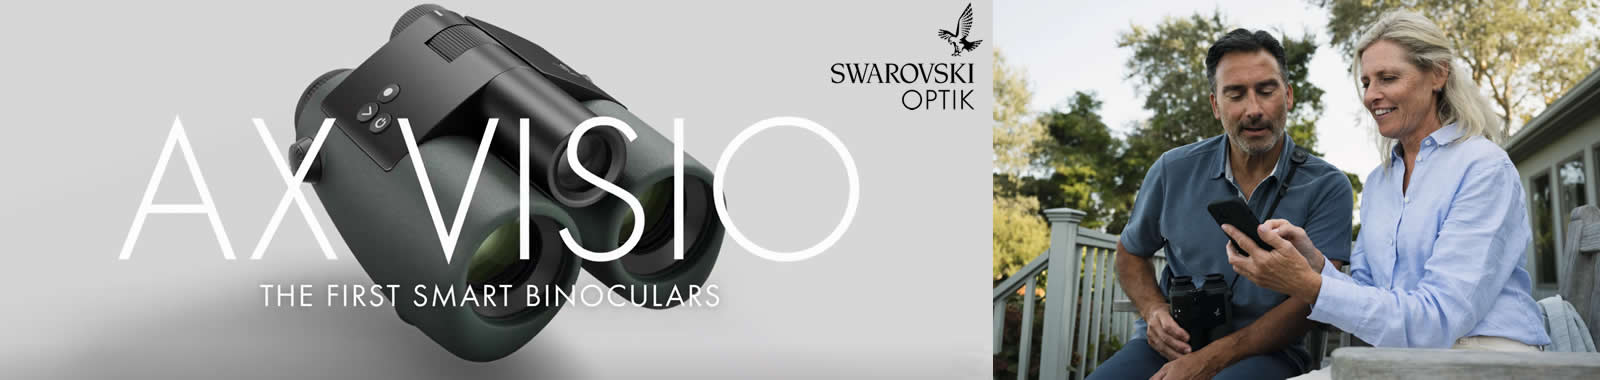 Swarovski AX Visio das smarte Fernglas